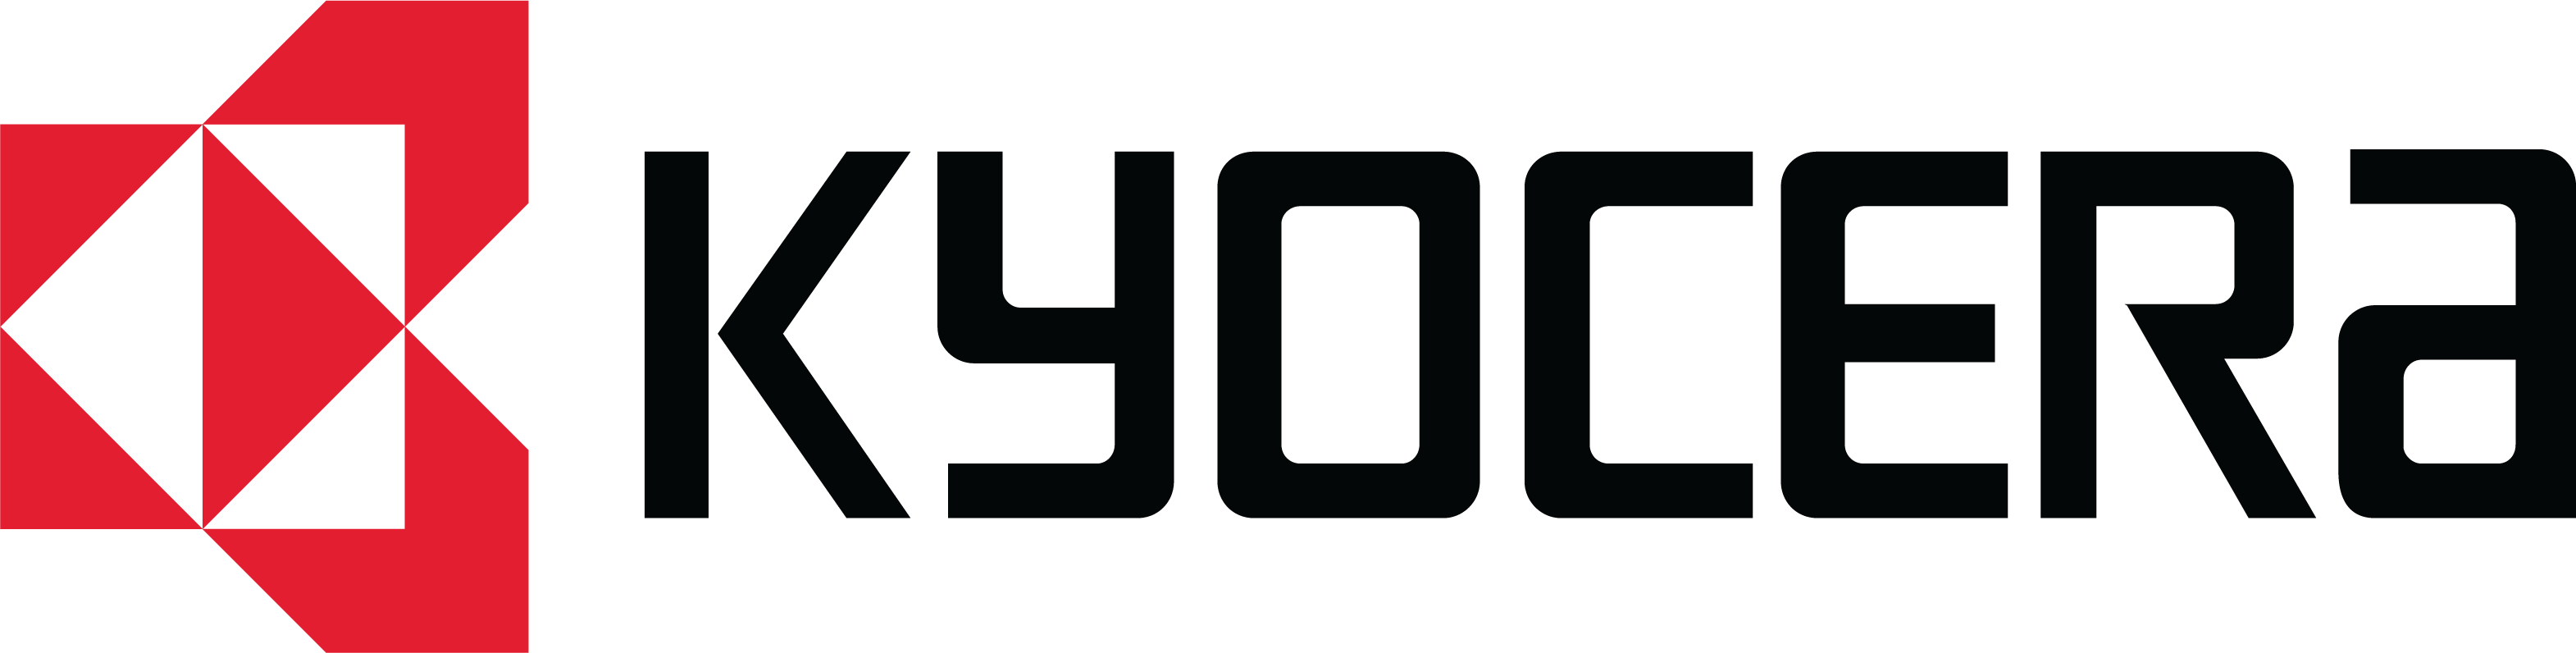 Kyocera Logo - Kyocera | Even More Logos | Logos, Solar panels, Solar